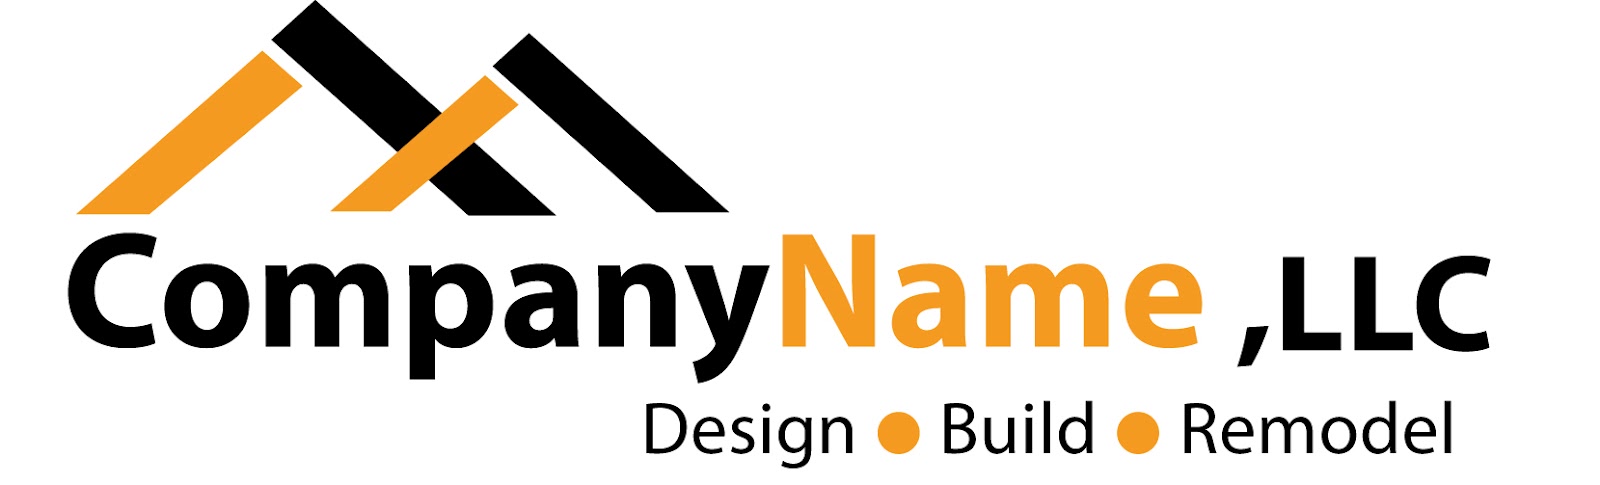 construction logo design software free download